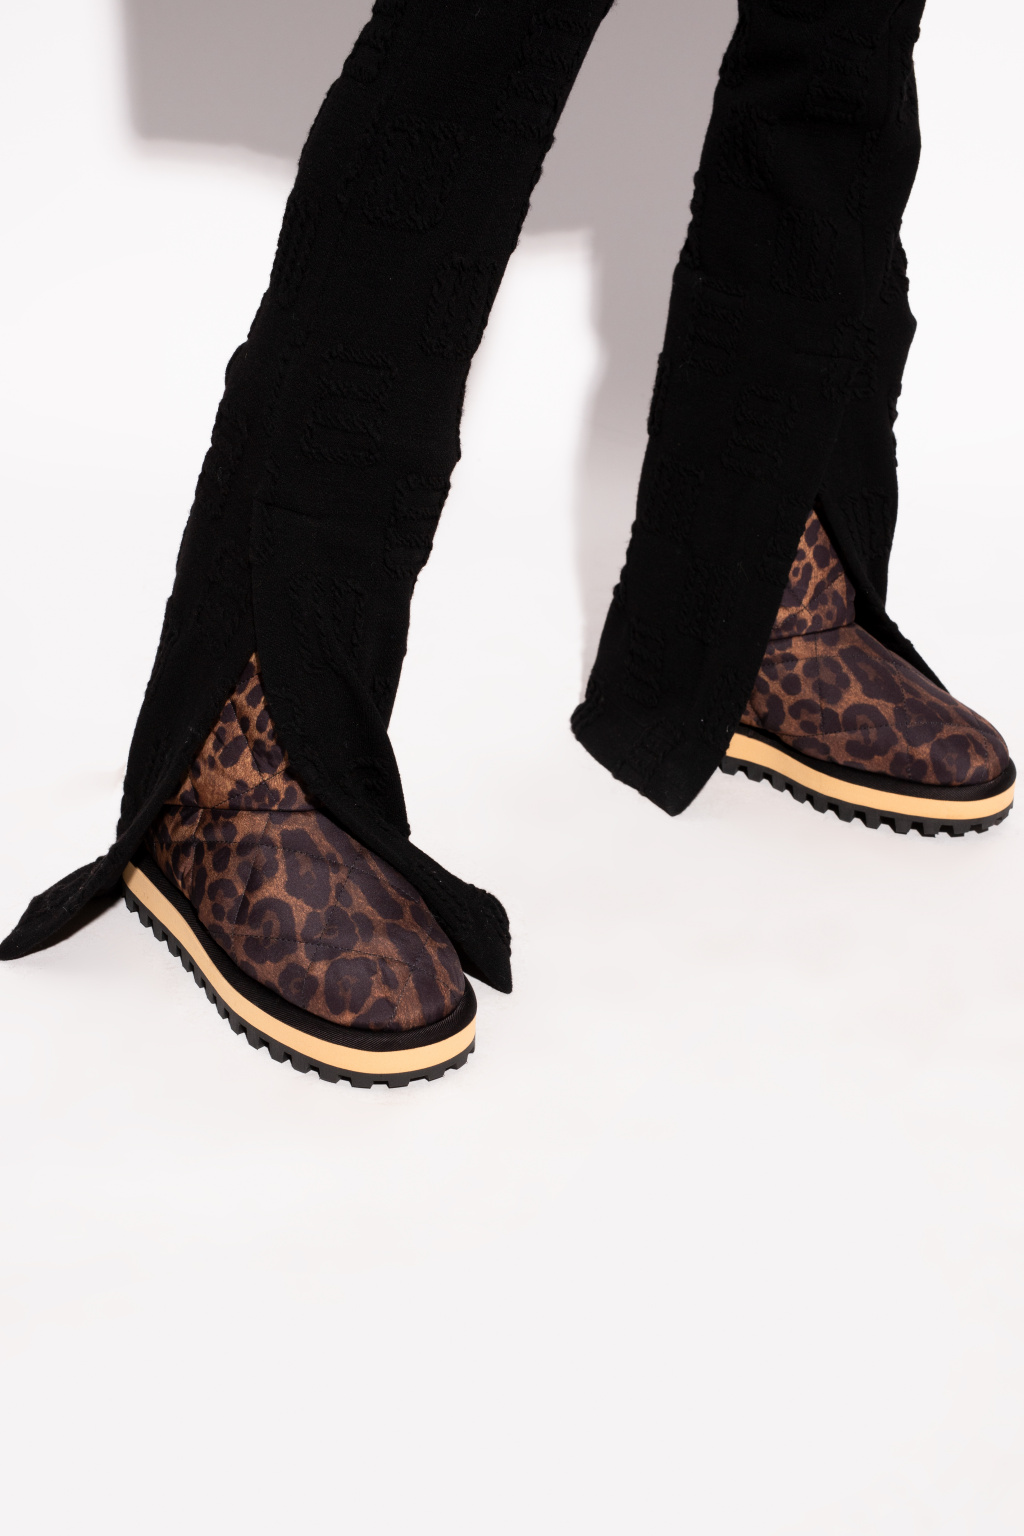 dolce javkd & Gabbana Waterproof snow boots